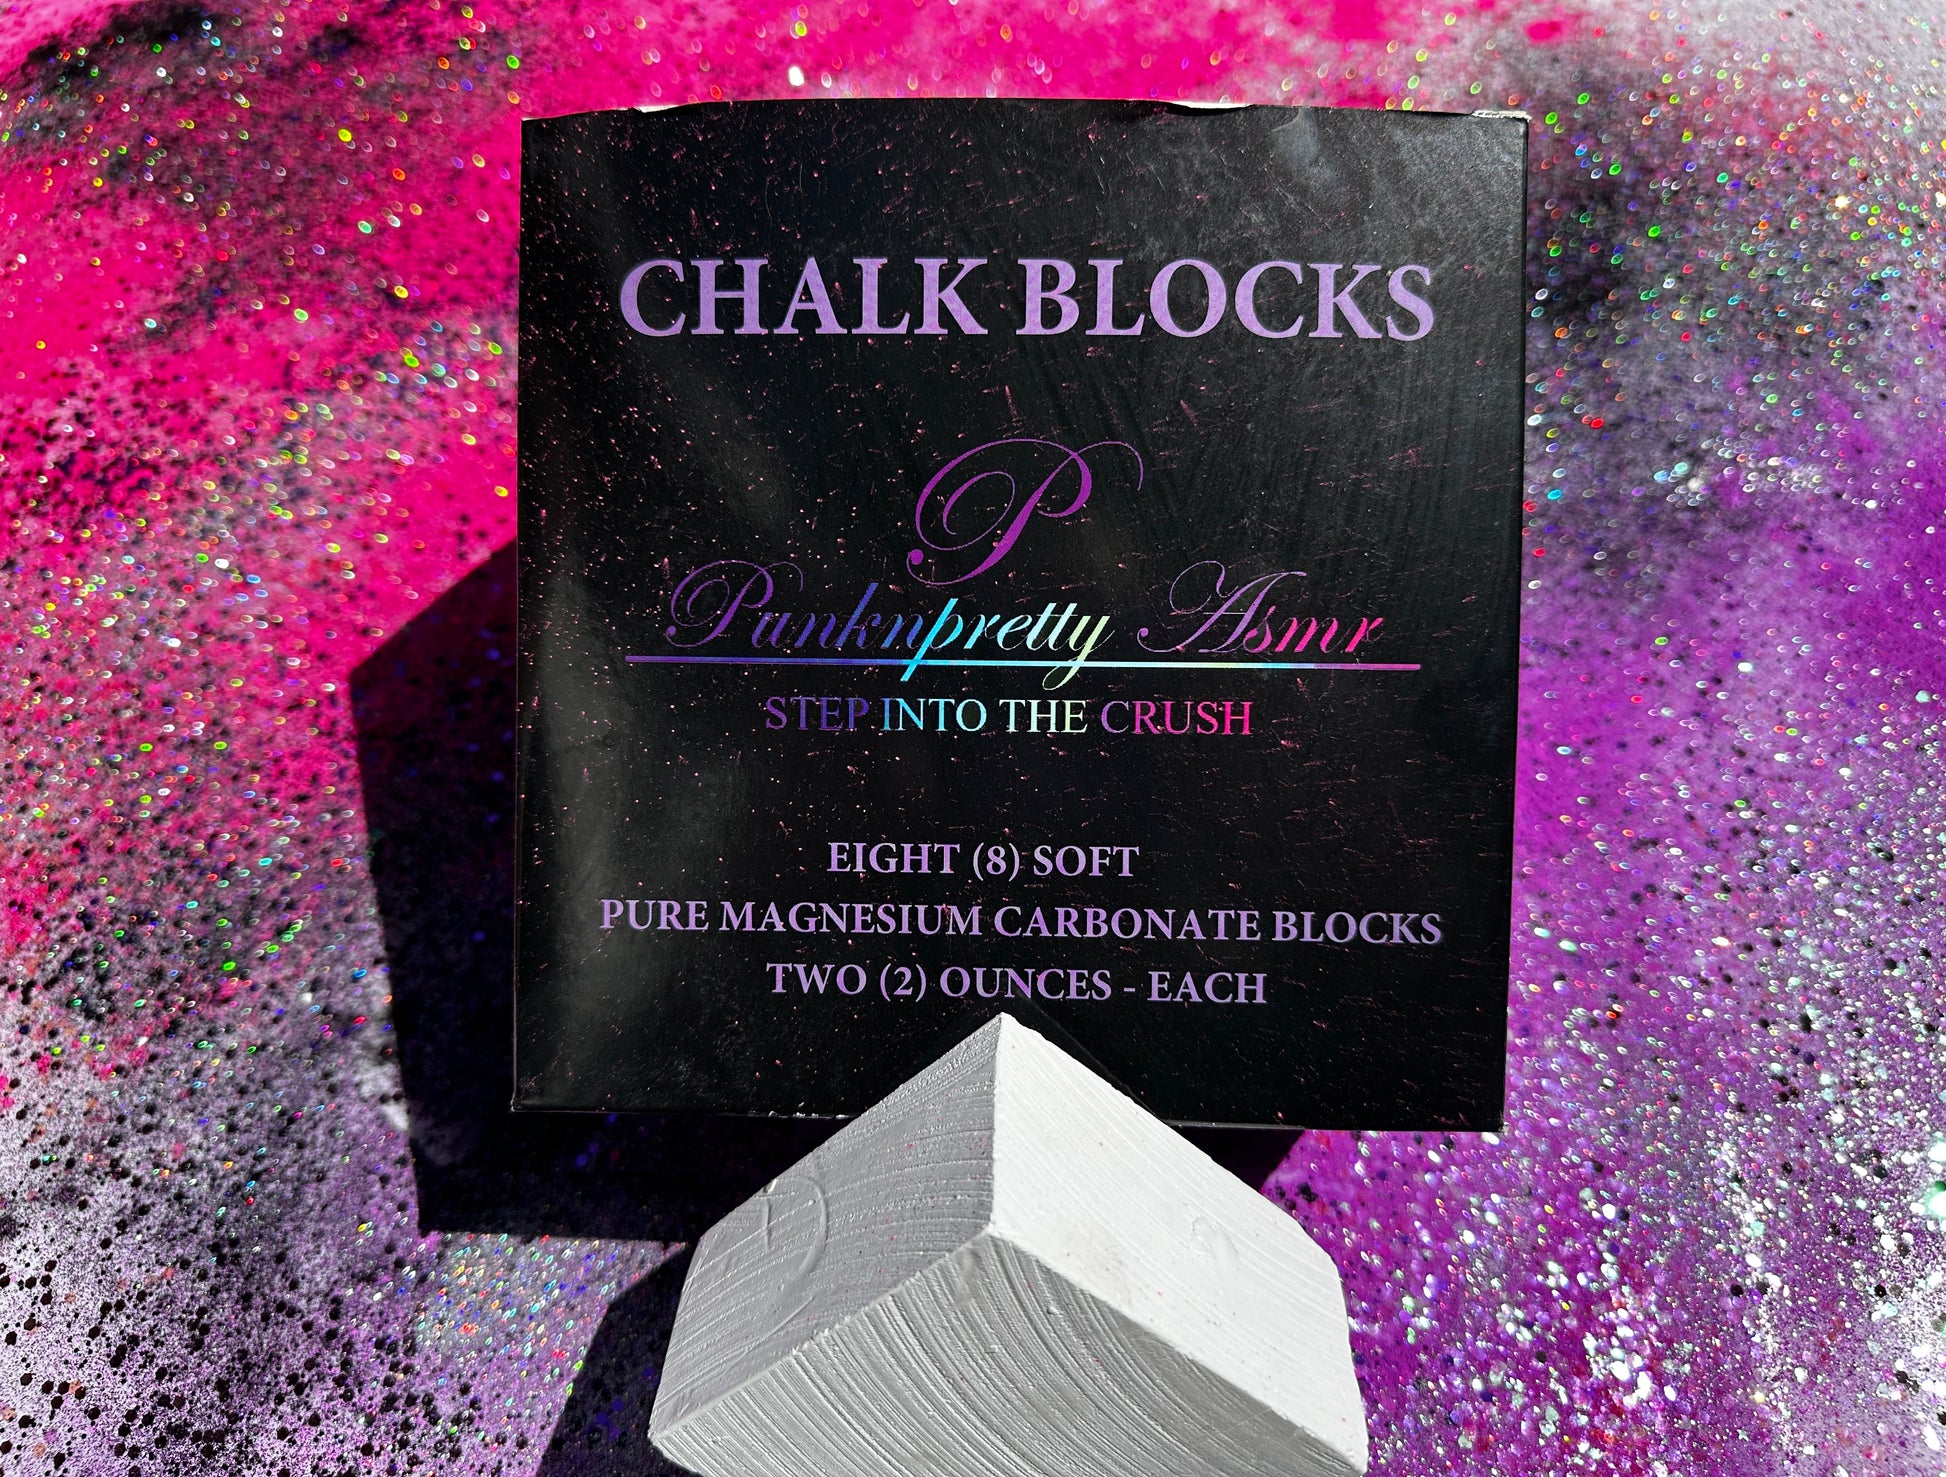 Gym Chalk Asmr Blocks Of Glitters With Beautiful Dyed Chalks